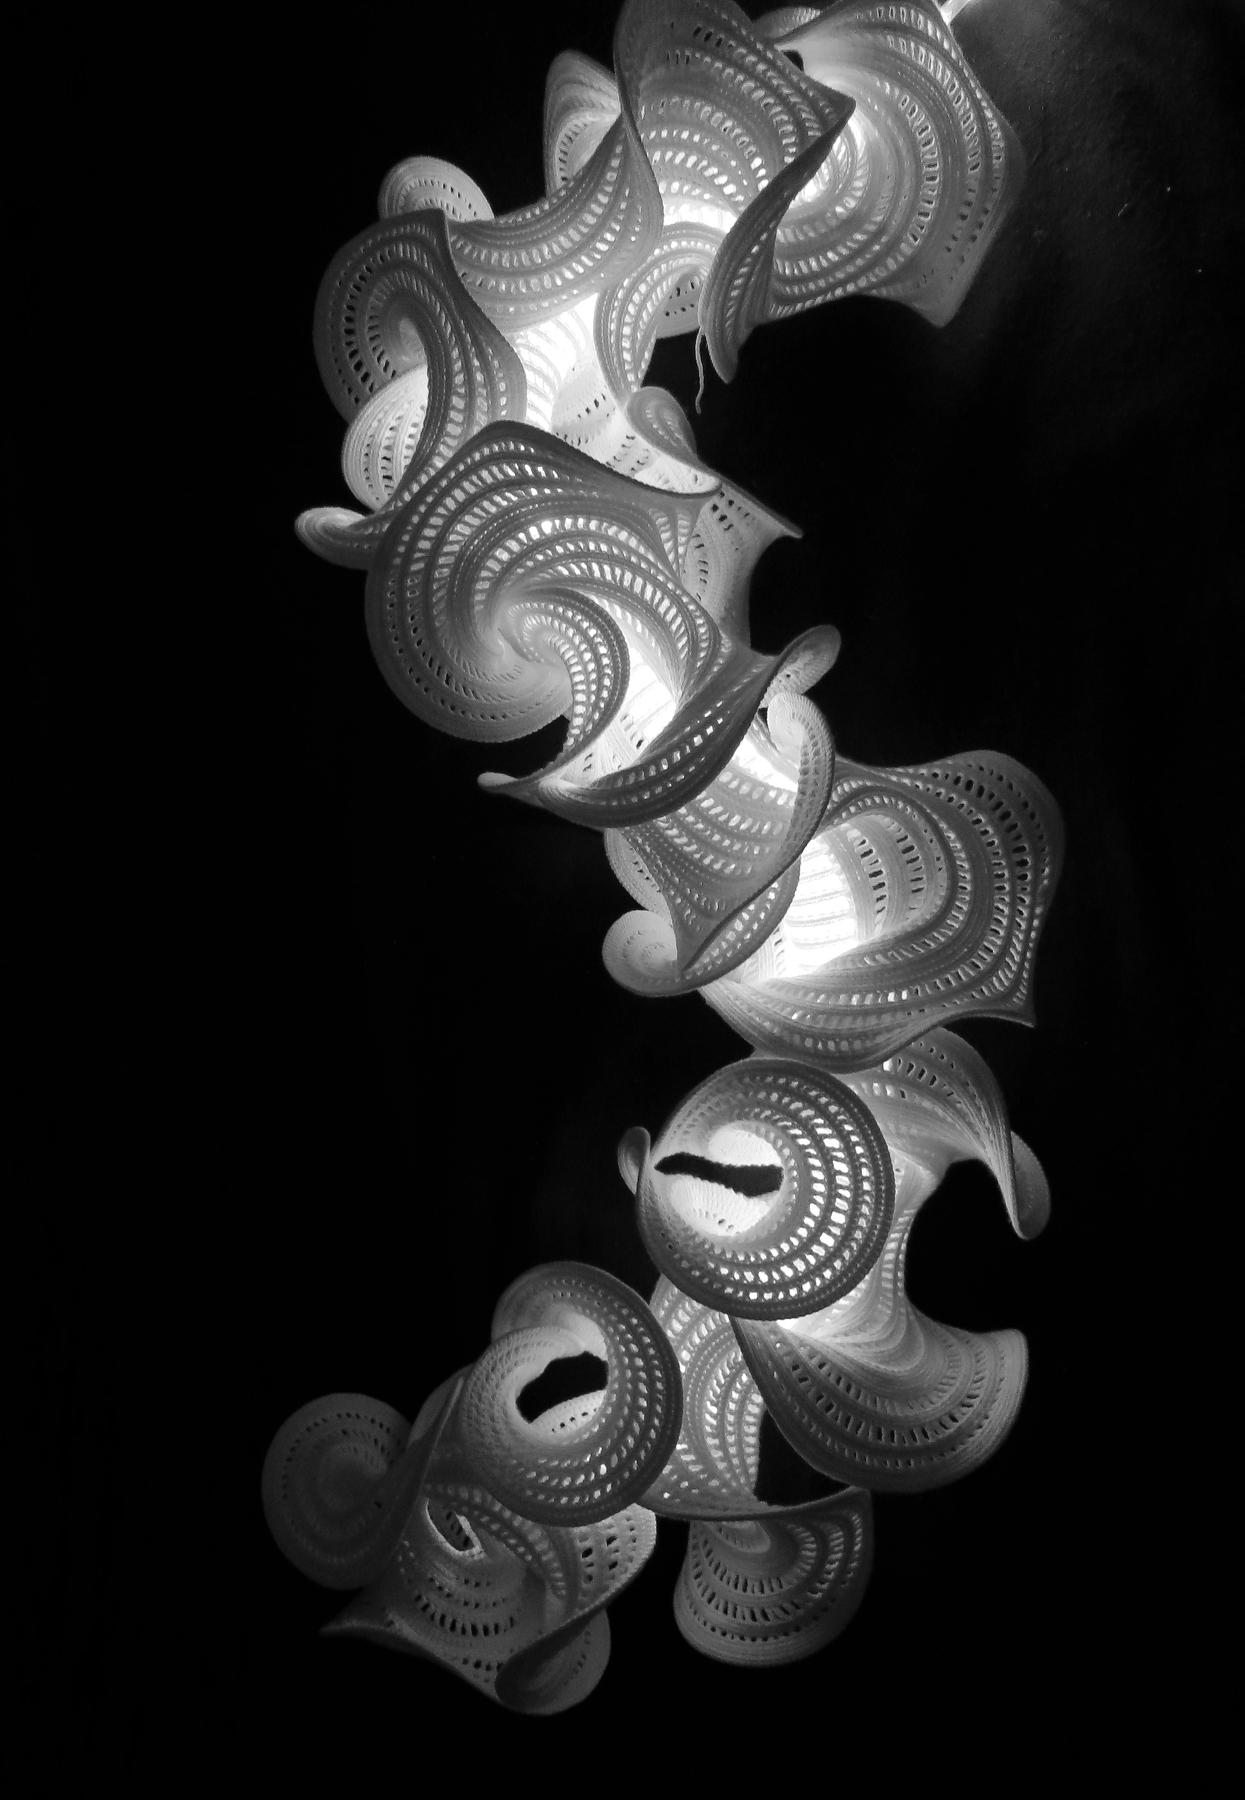 Image for entry 'Curved Light Snake'